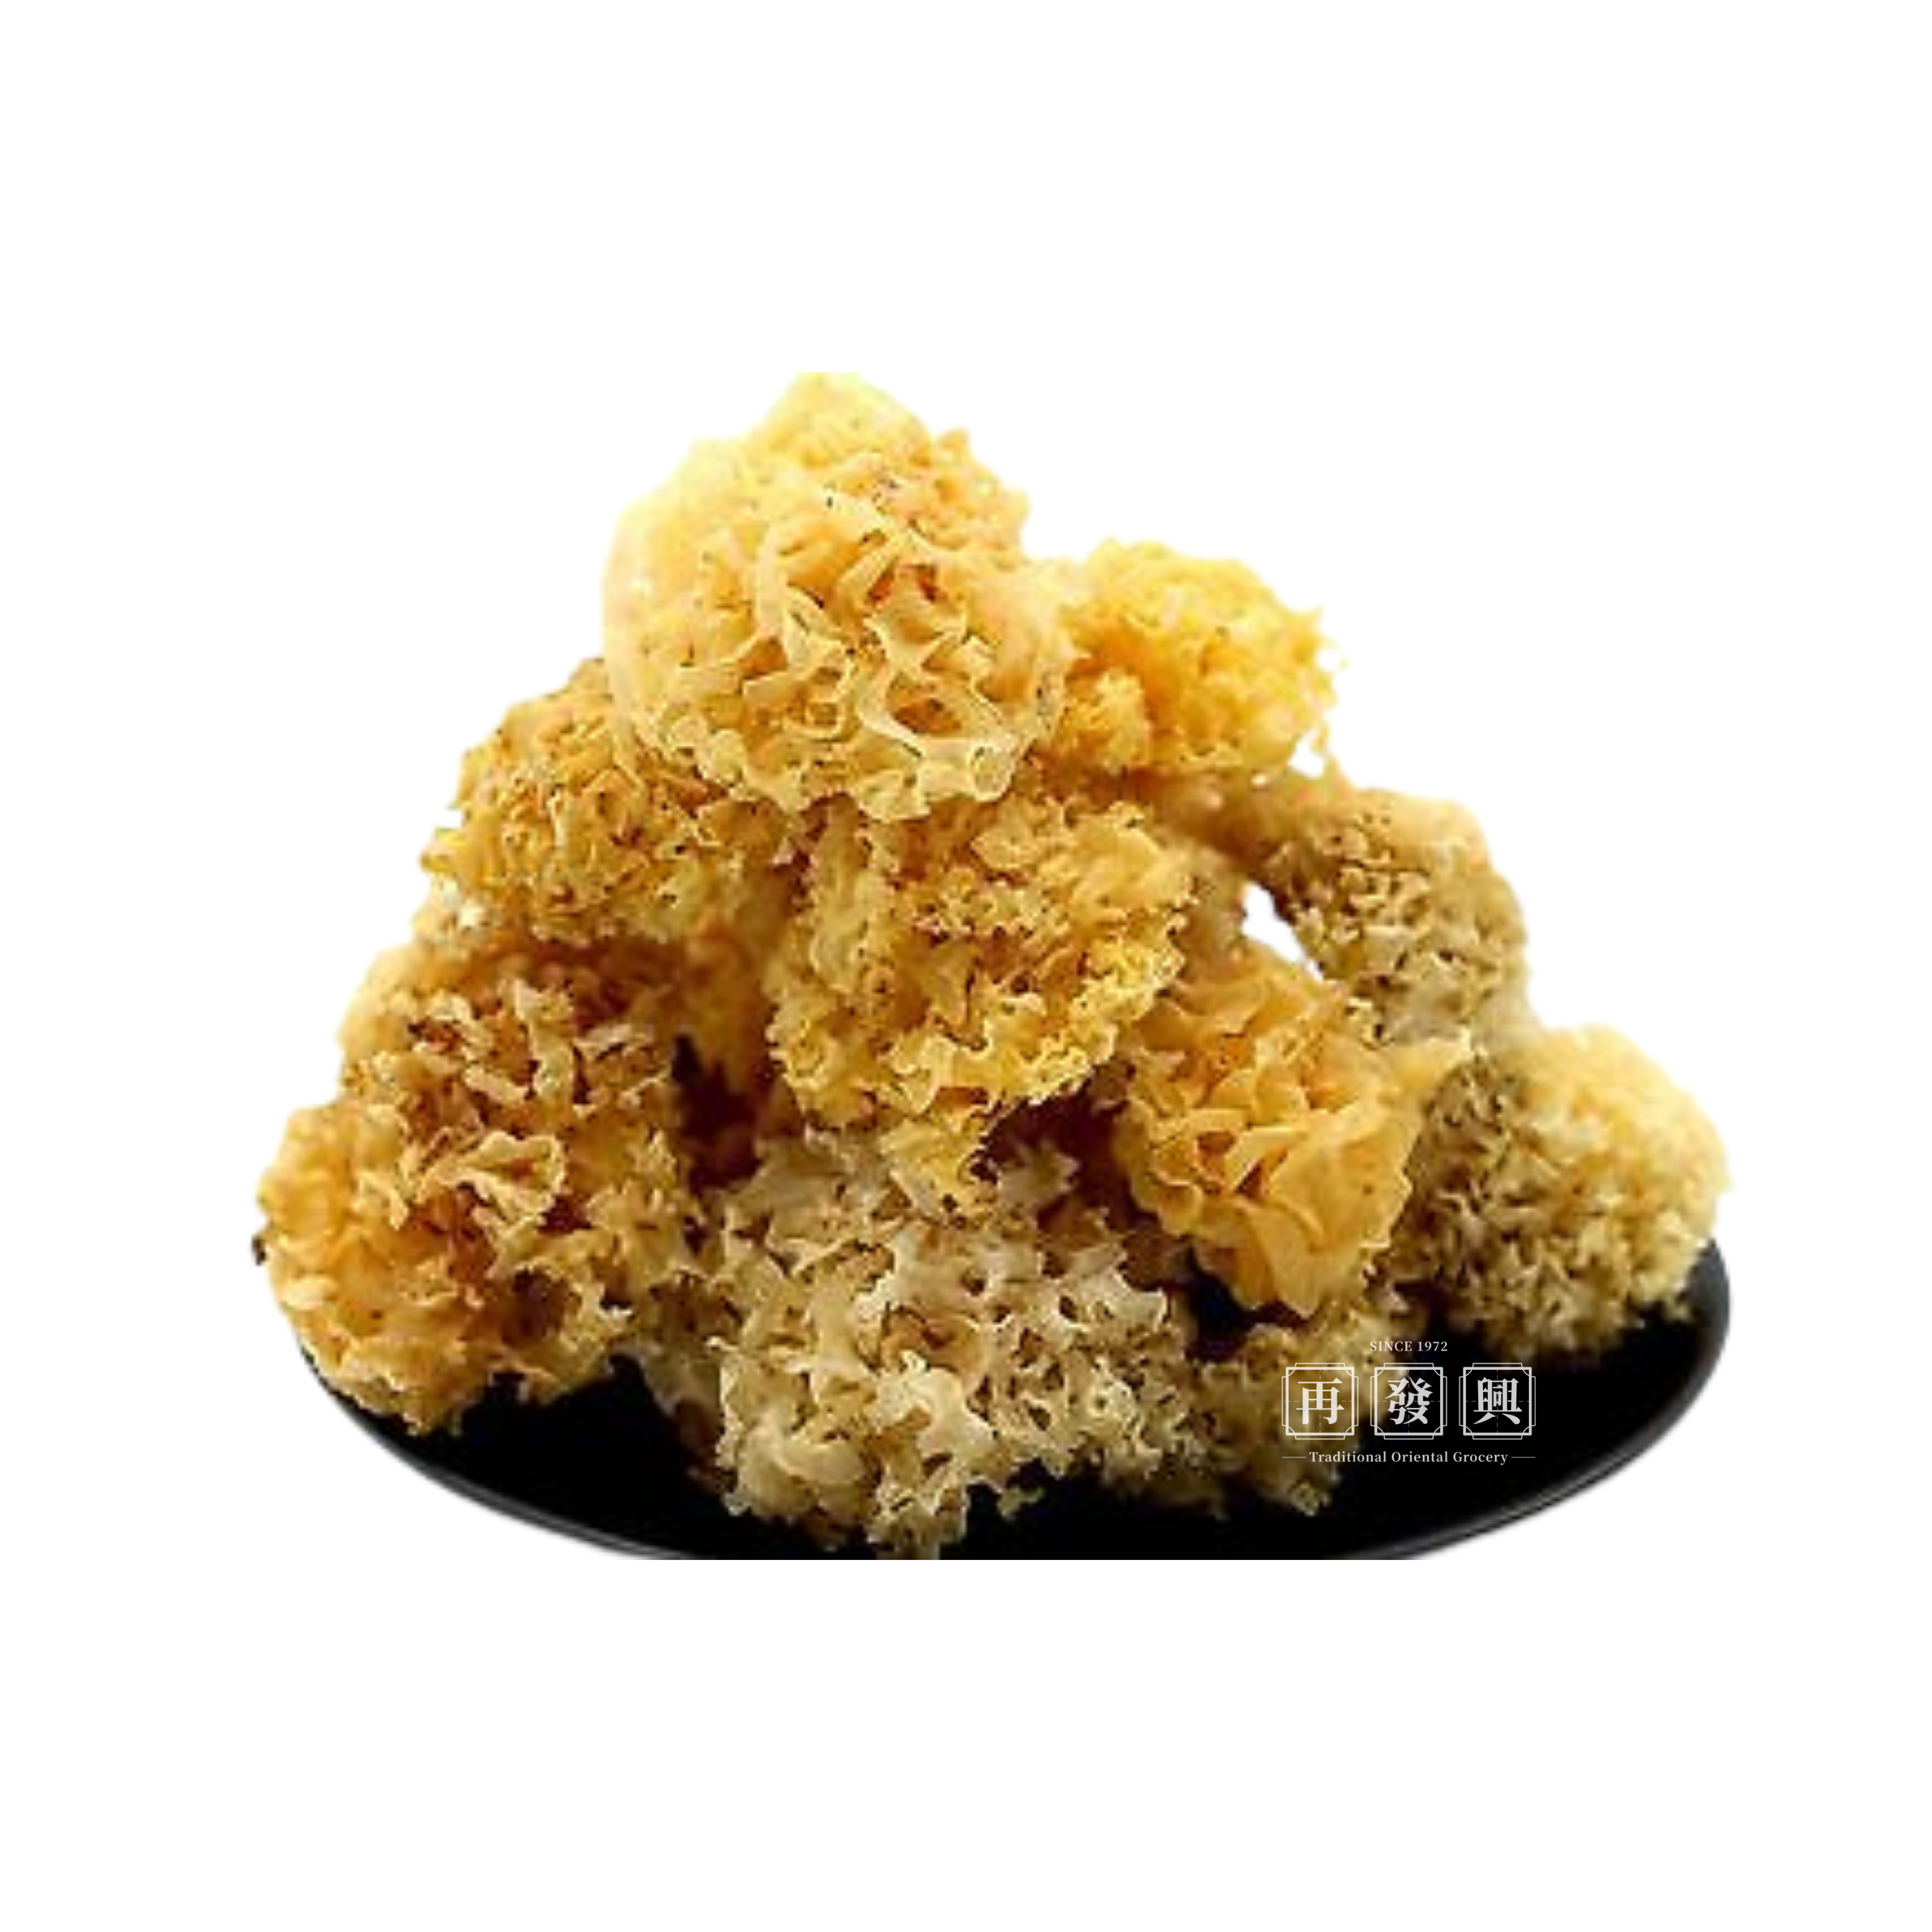 Zhang Zhou Premium White Fungus 100g